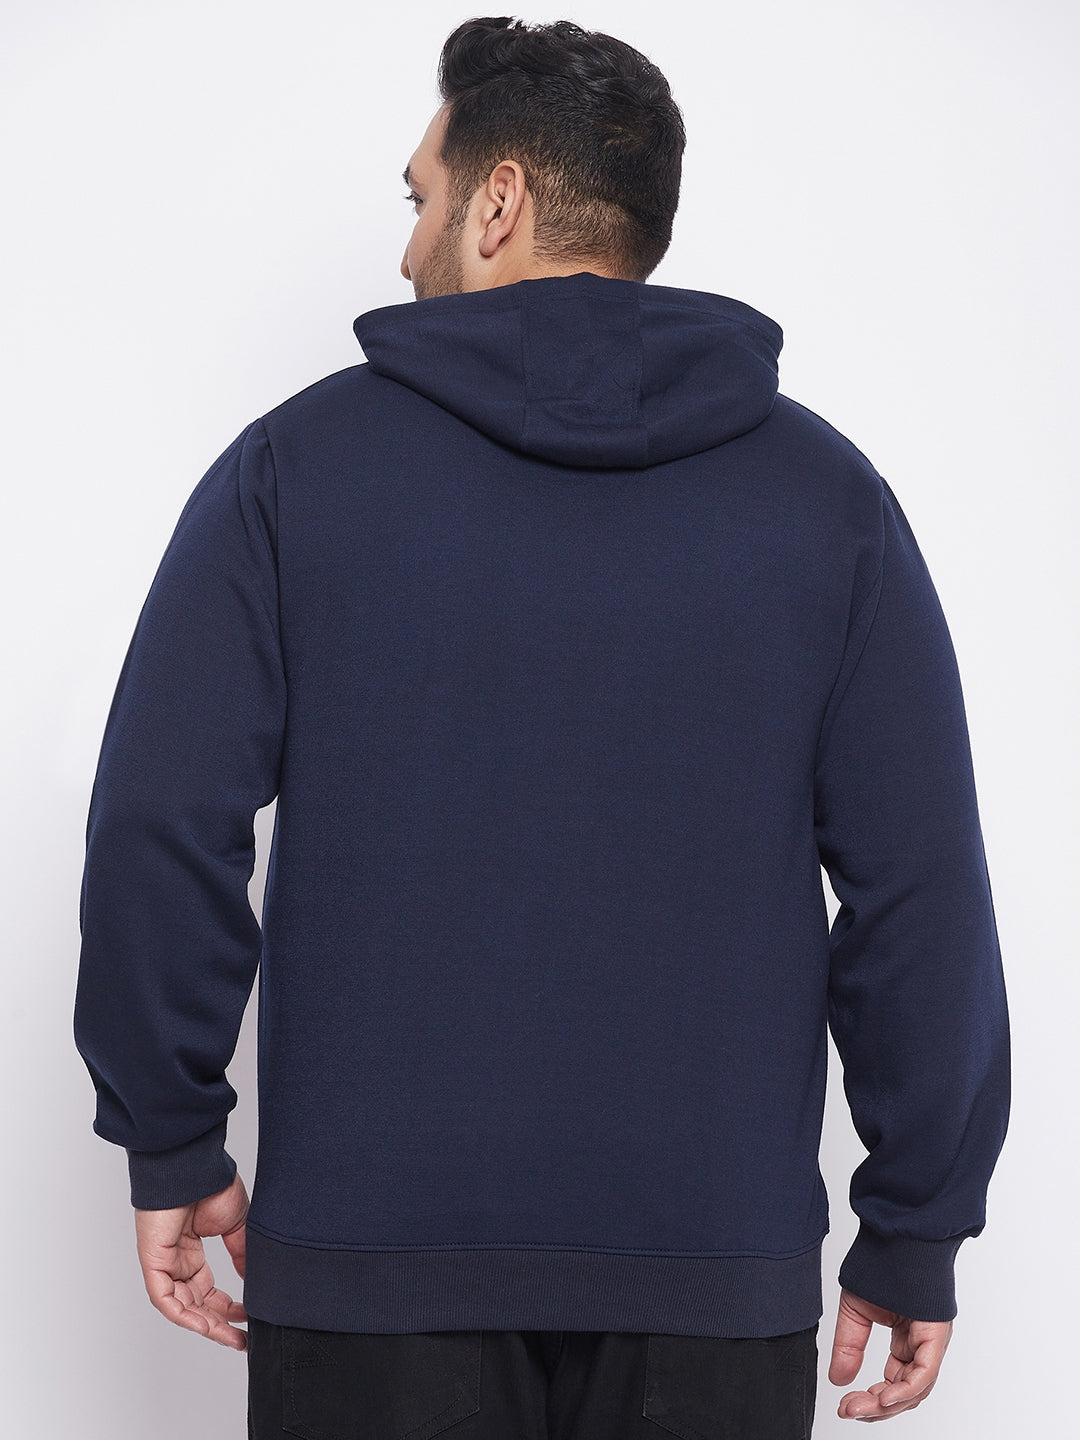 Austivo Men's  Colour Block Hooded Sweatshirt